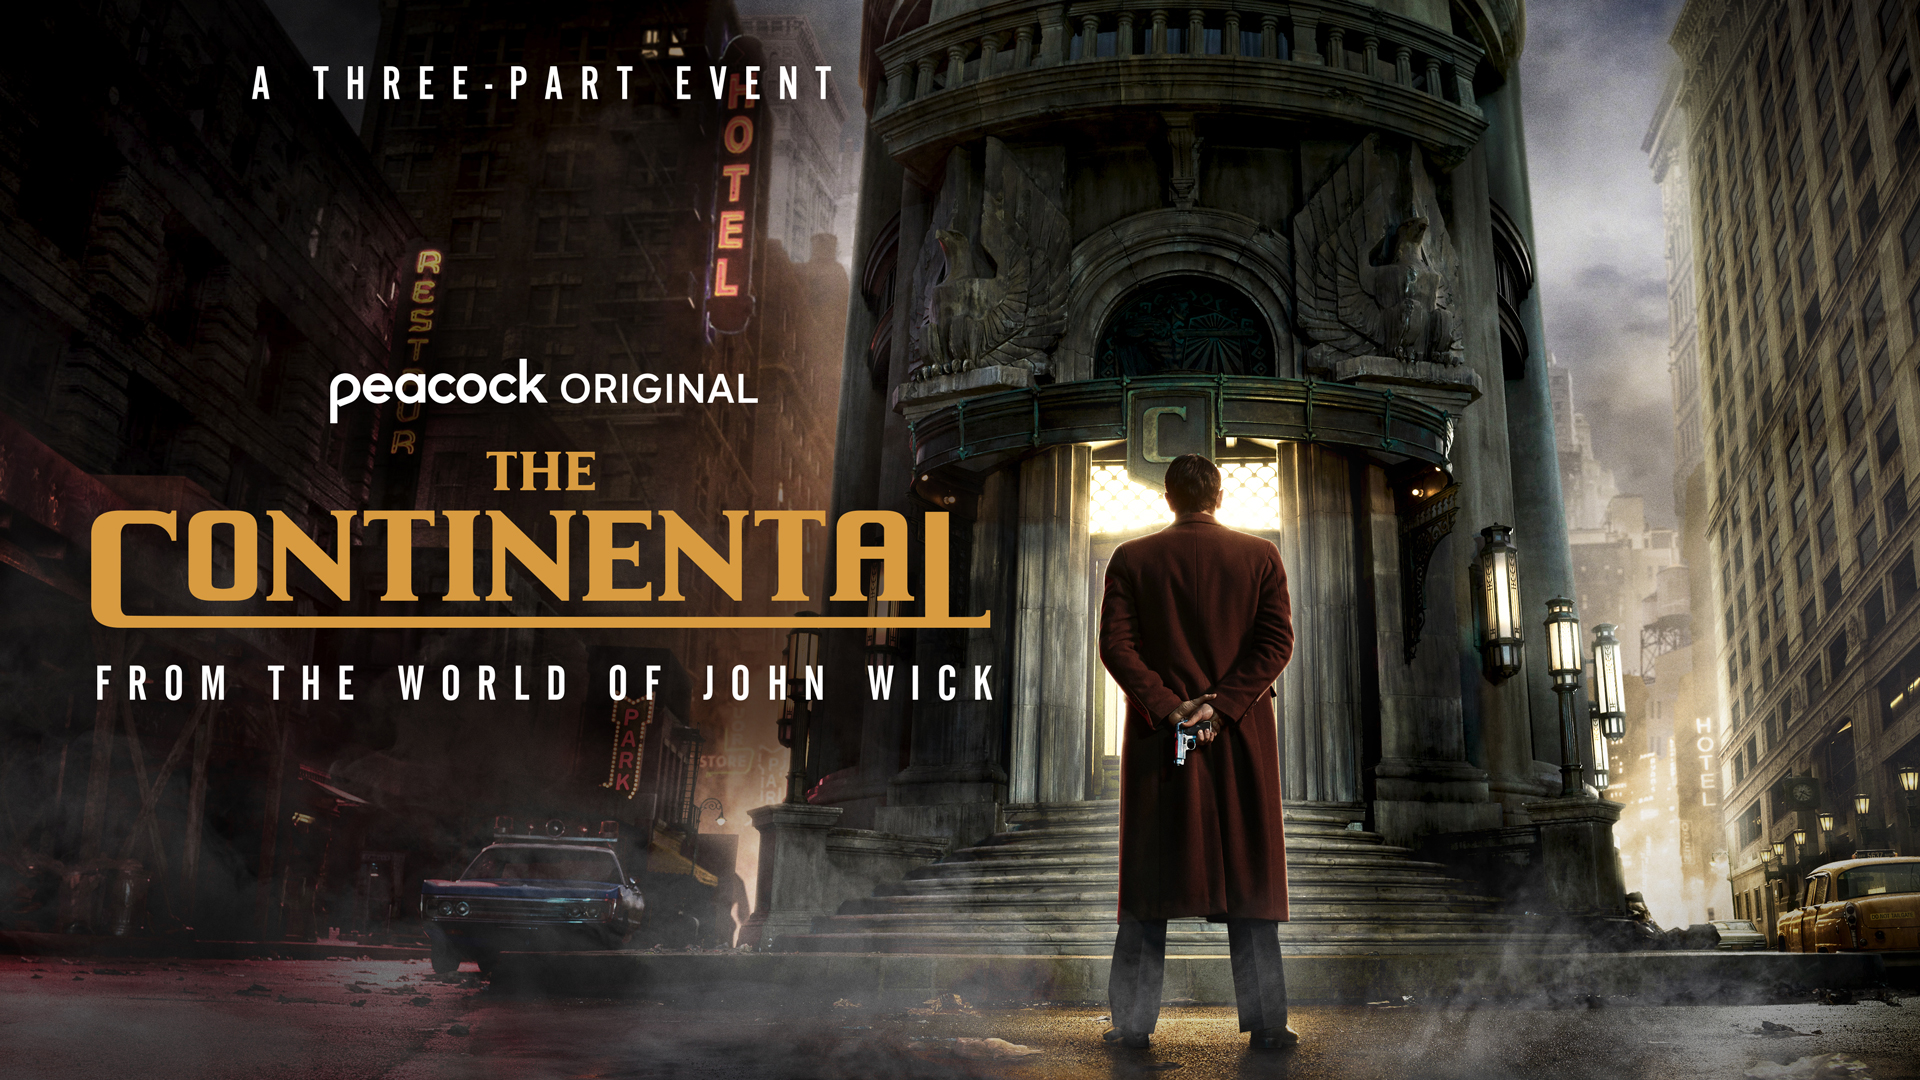 Why John Wick Really Killed Santino & Broke The Continental Rule - IMDb